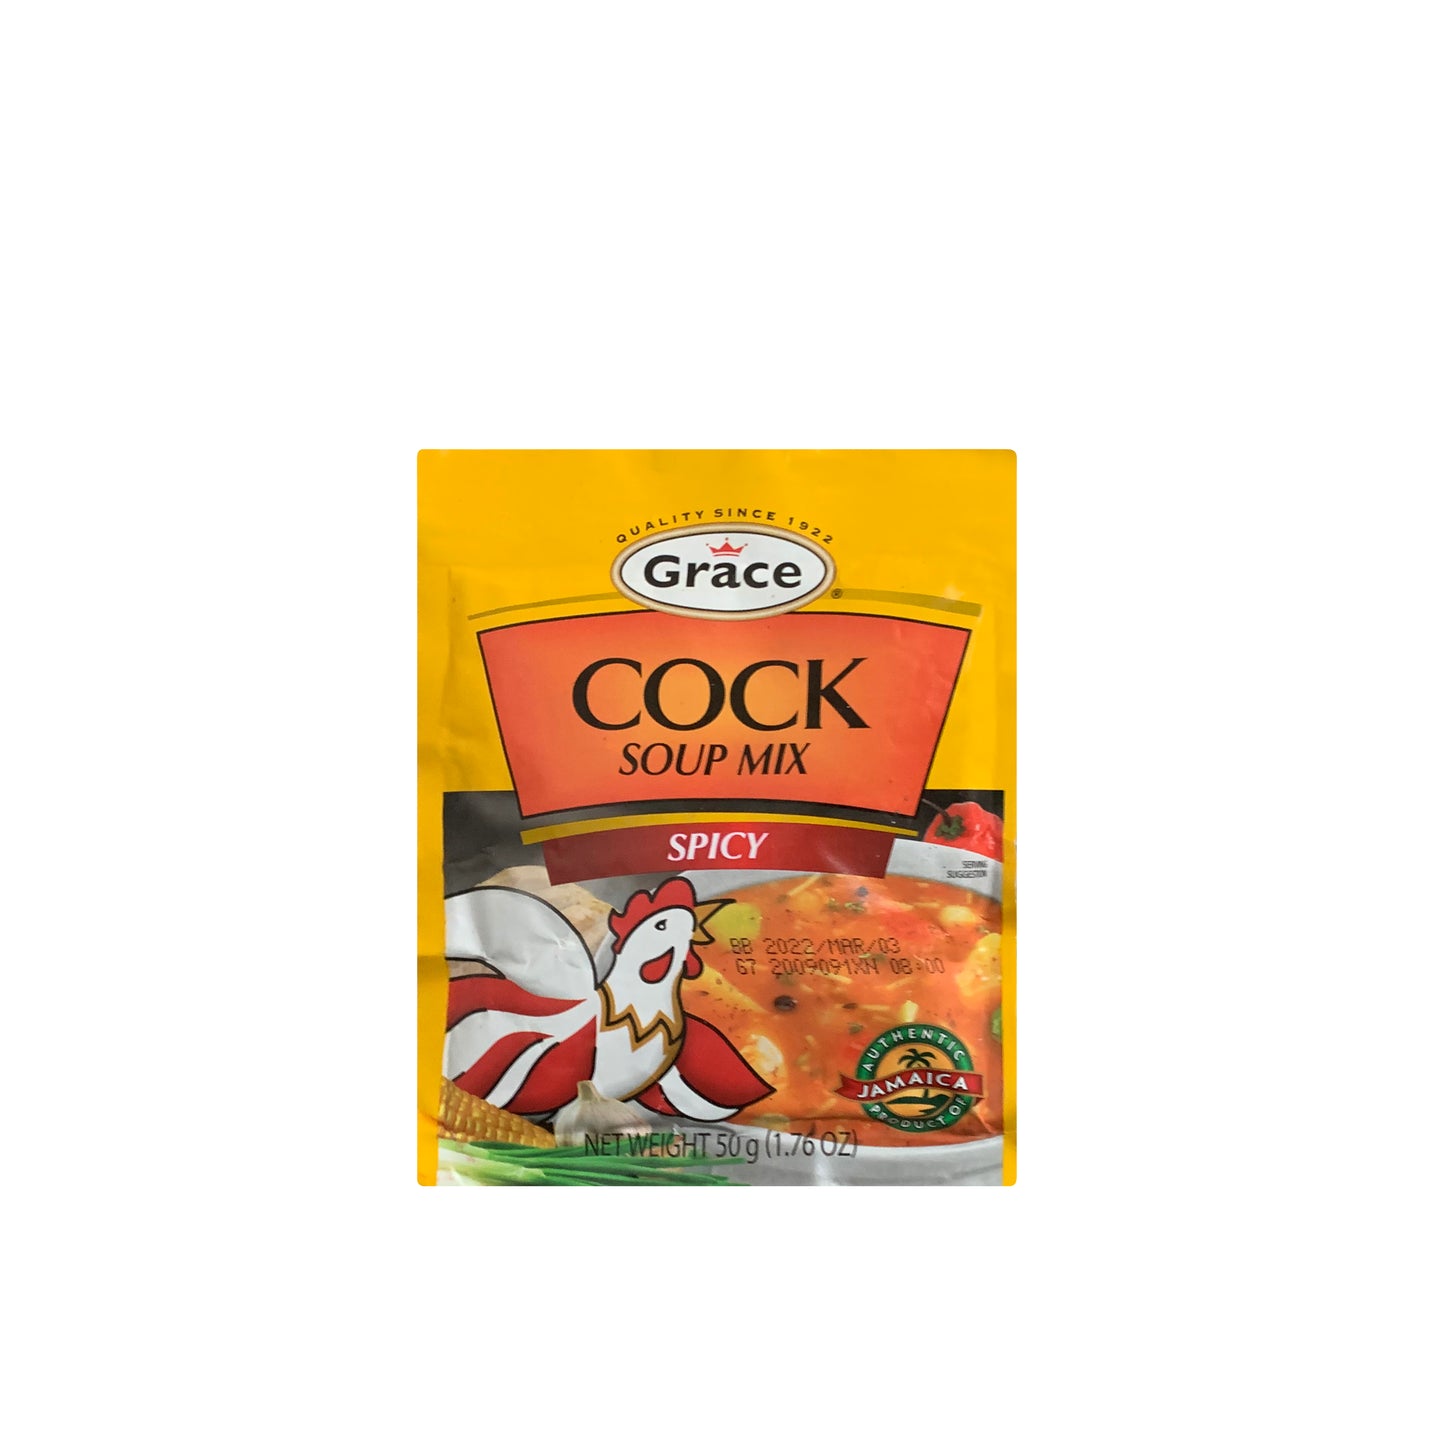 Grace Cock Soup Mix Spicy